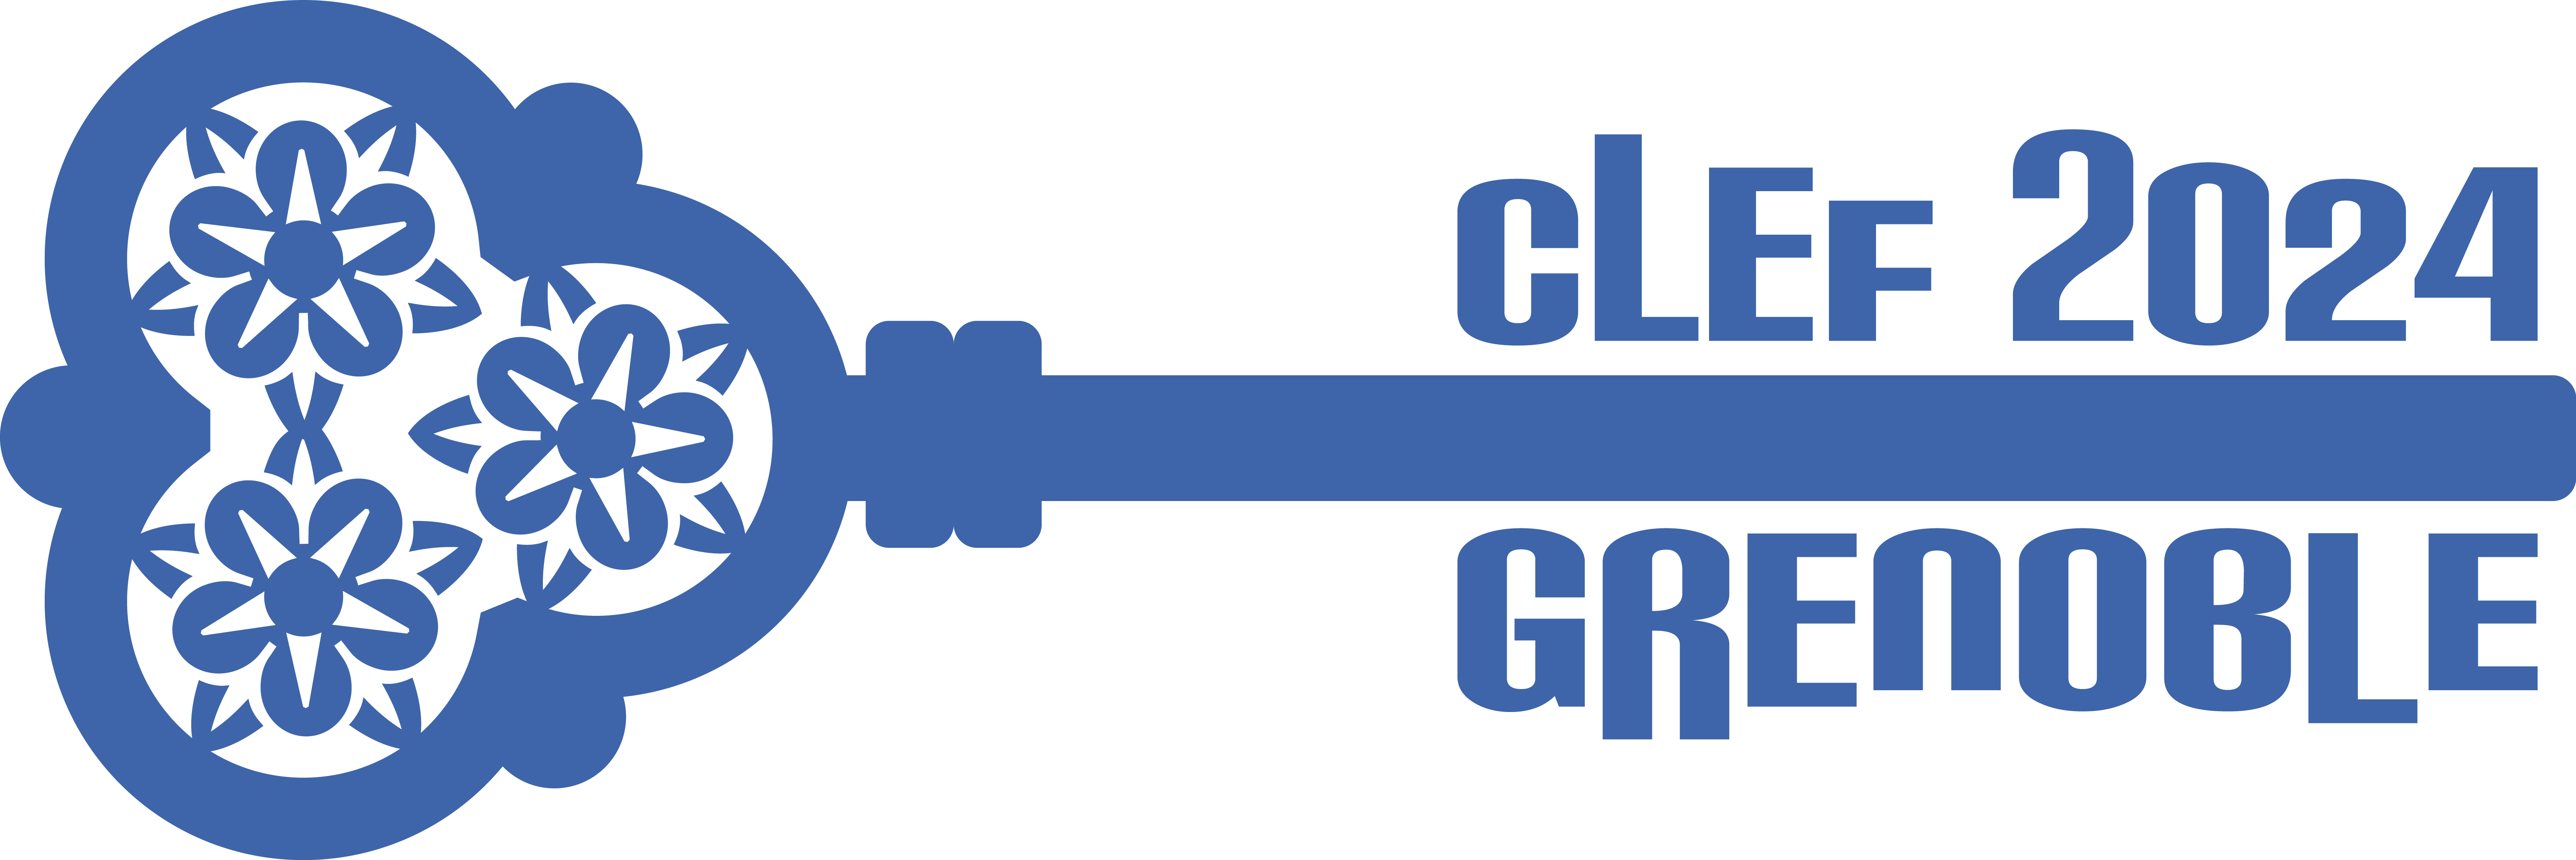 CLEF 2024 Grenoble Logo